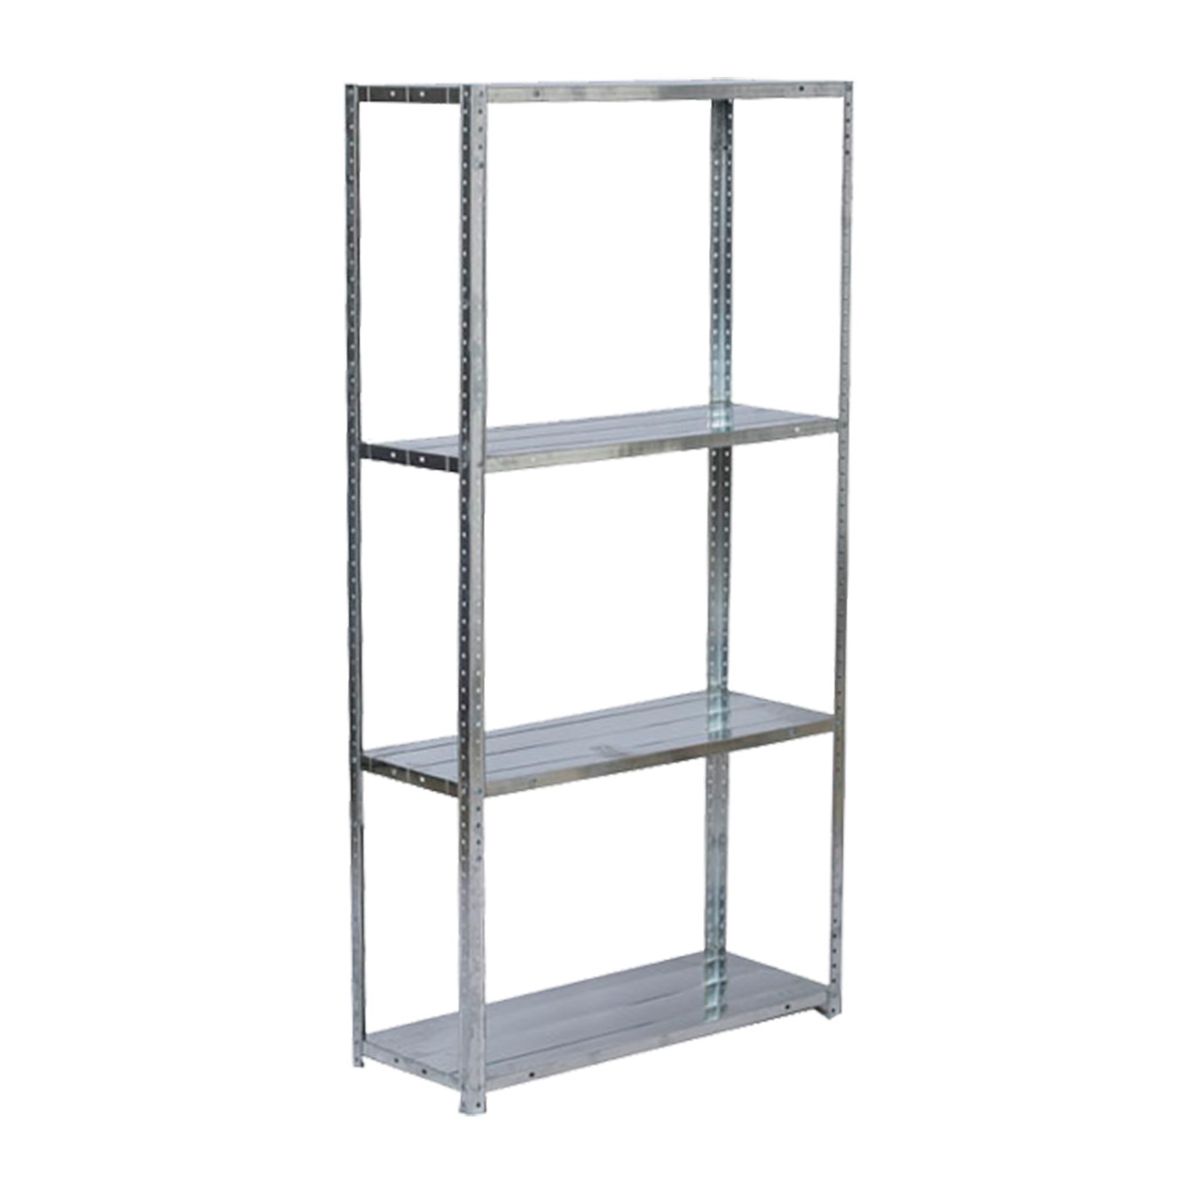 Galvanized shelf with 4 shelves BSR1600 023333 Bormann